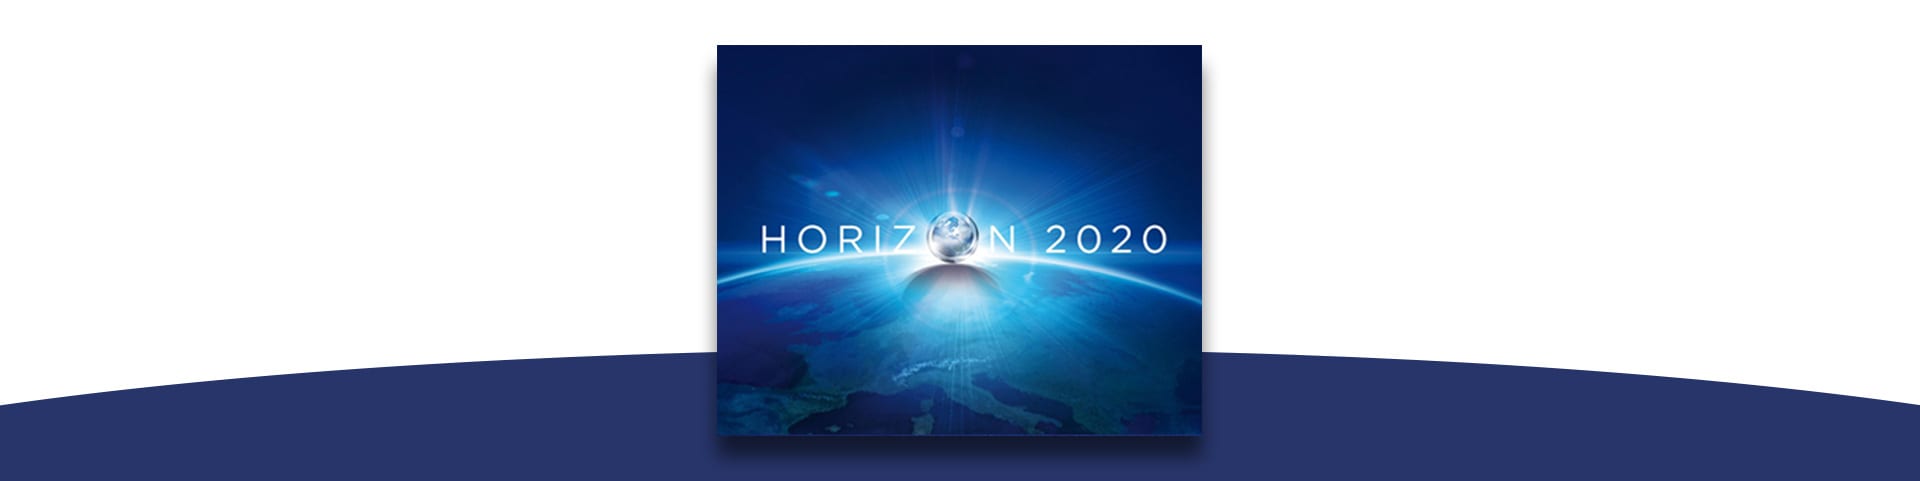 Horizon 2020no alt text set su stradedeuropa.eu